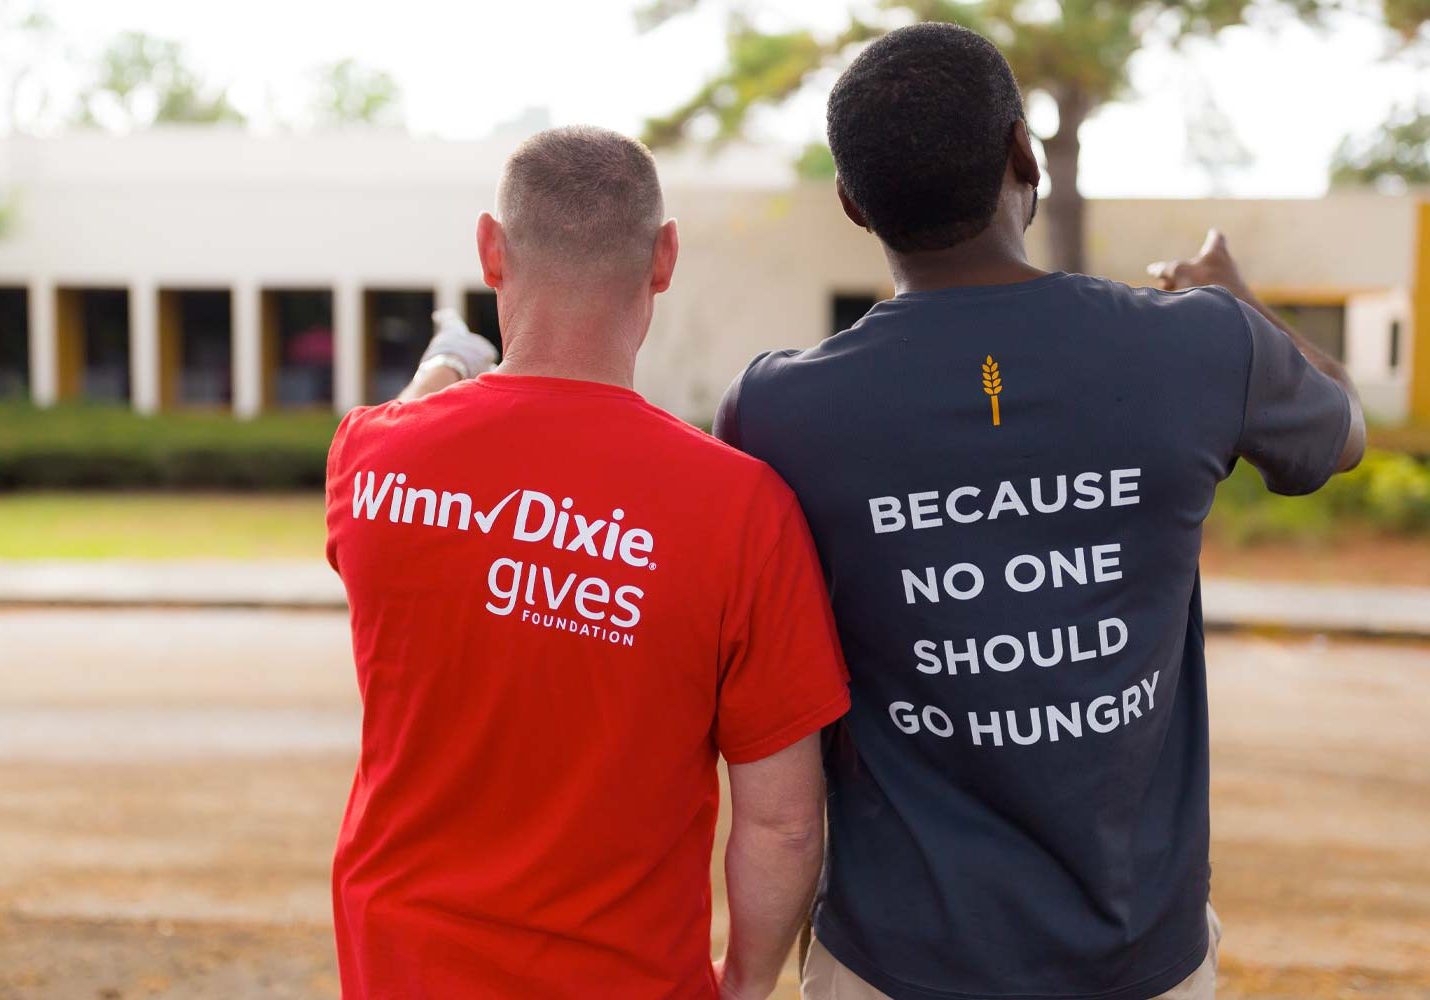 Winn-Dixie Parent Company Donates $20